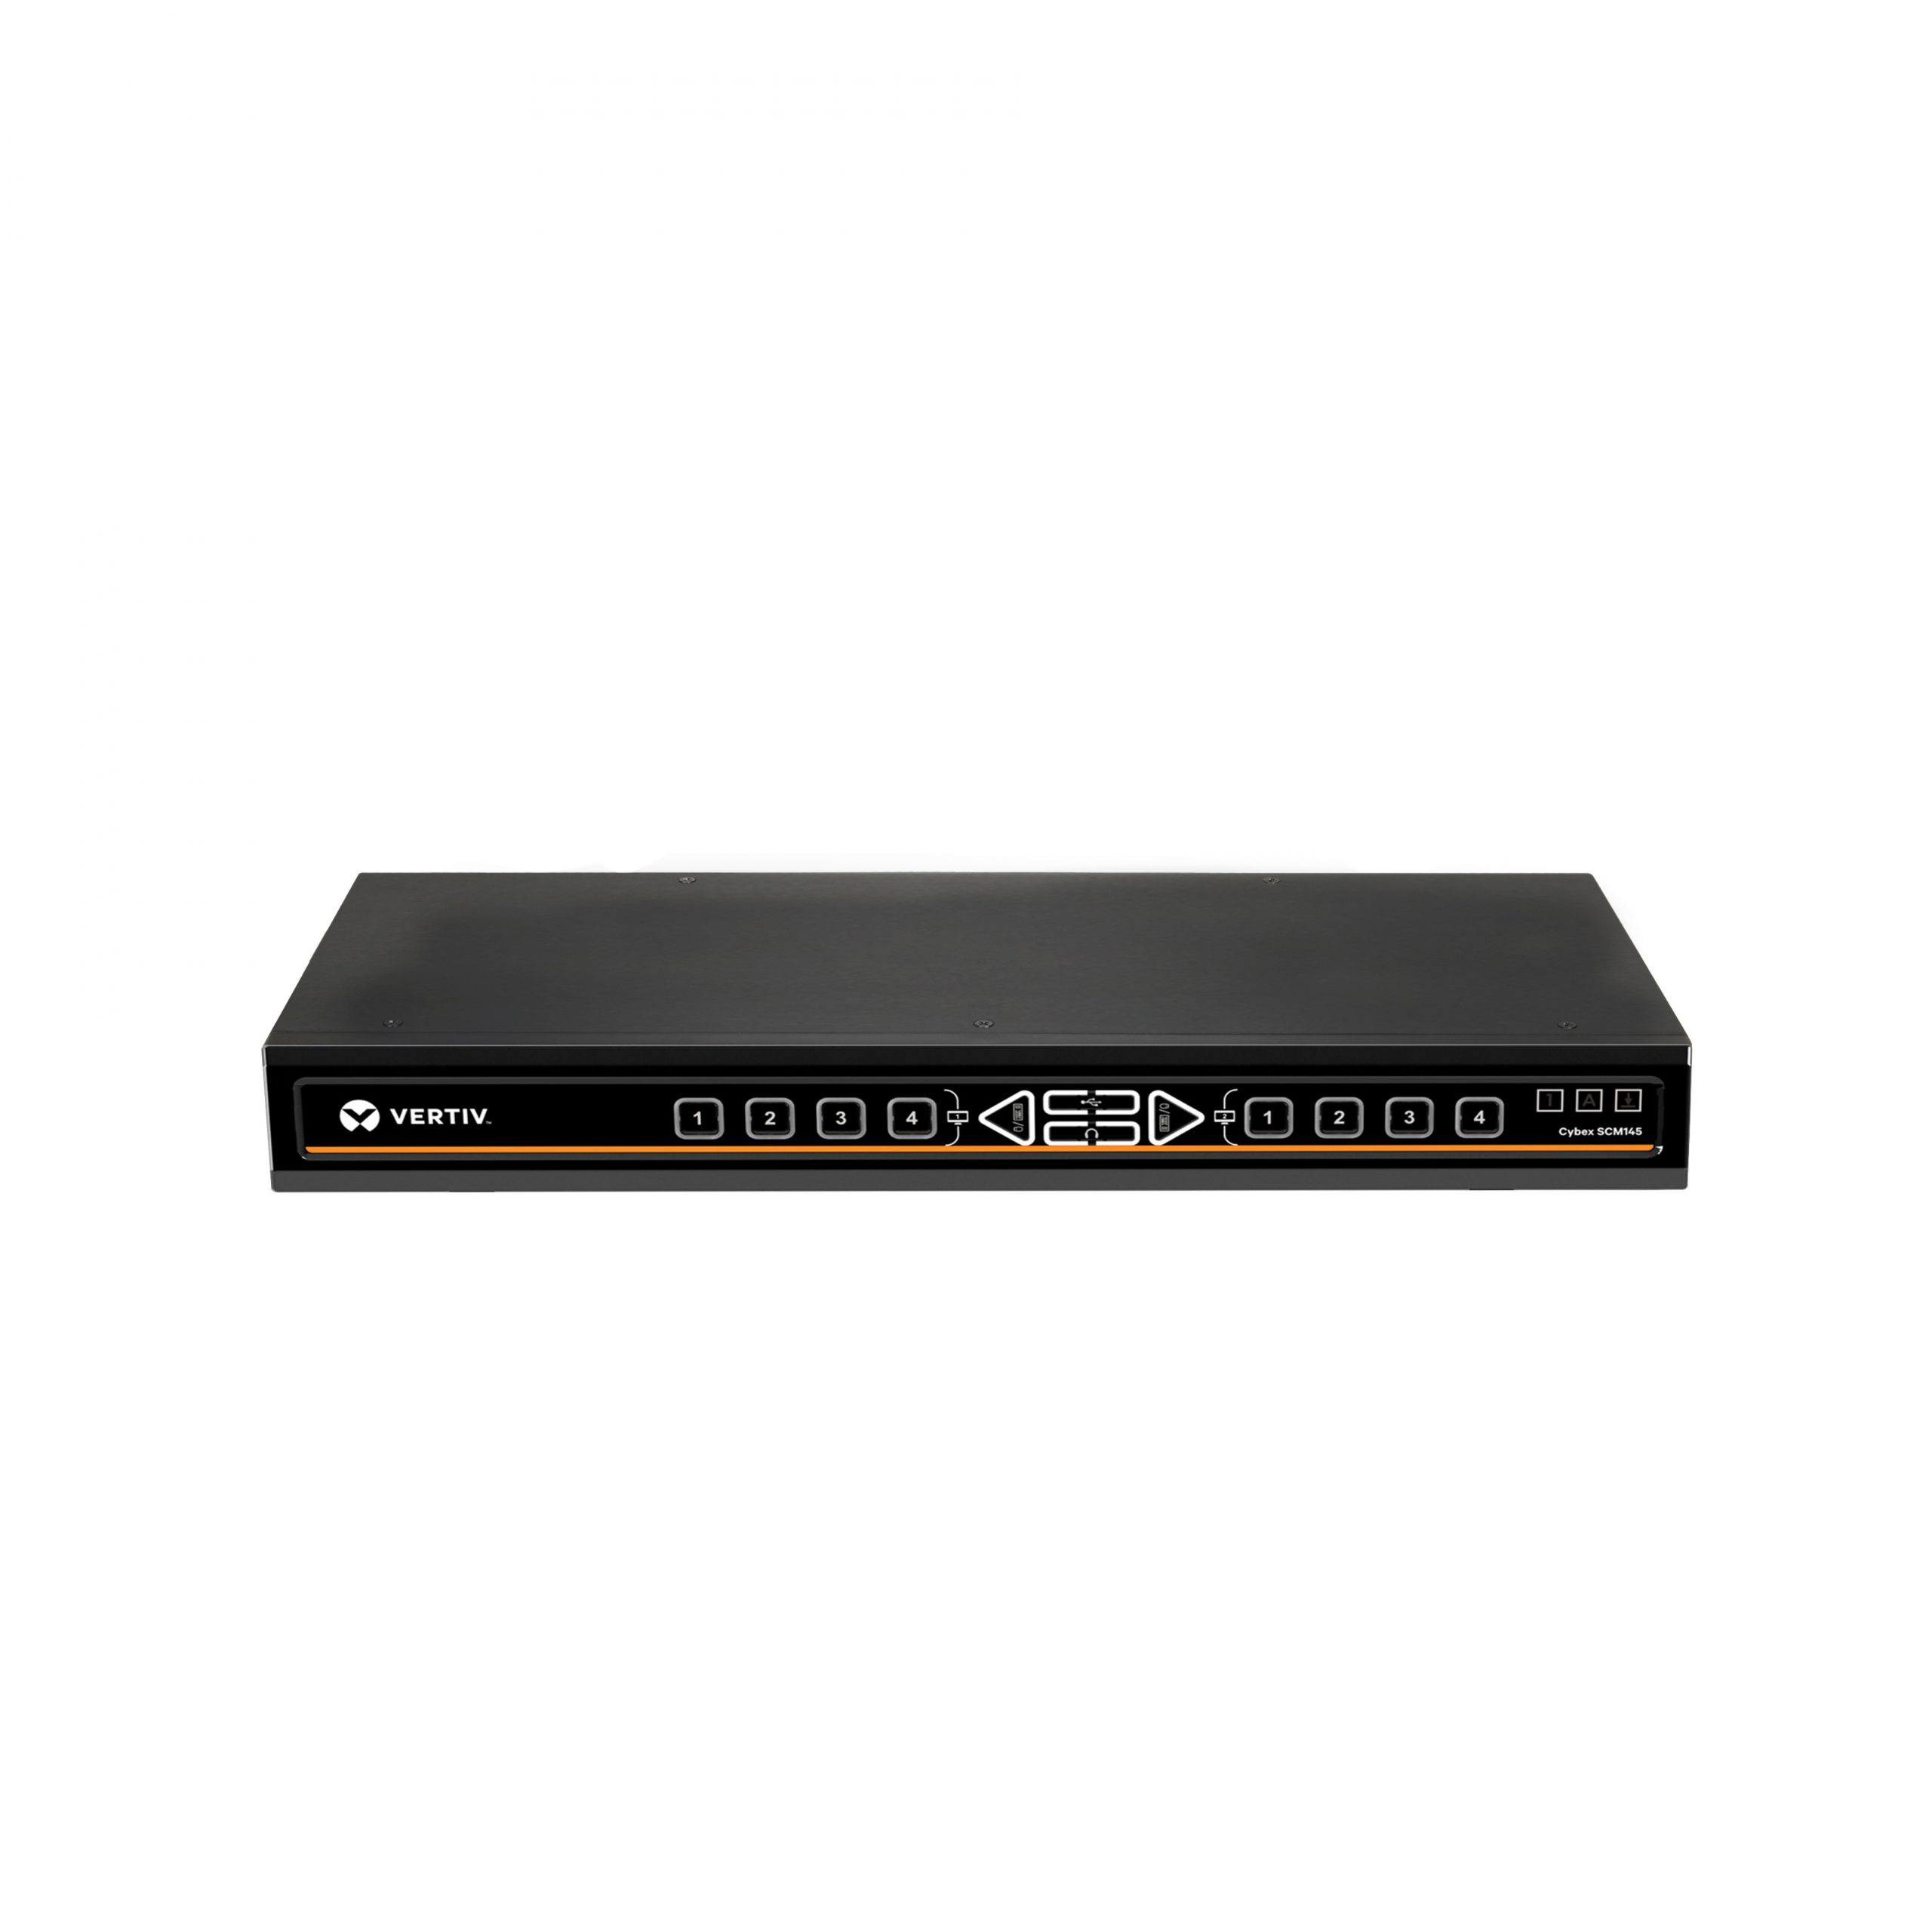 Vertiv Cybex SCM145 Secure KVM Switch4-Port, Dual Display, DVI-I in, DVI-I out, Secure Matrix KVM with DPP (Dedicated Peripheral Port) SCM145-001